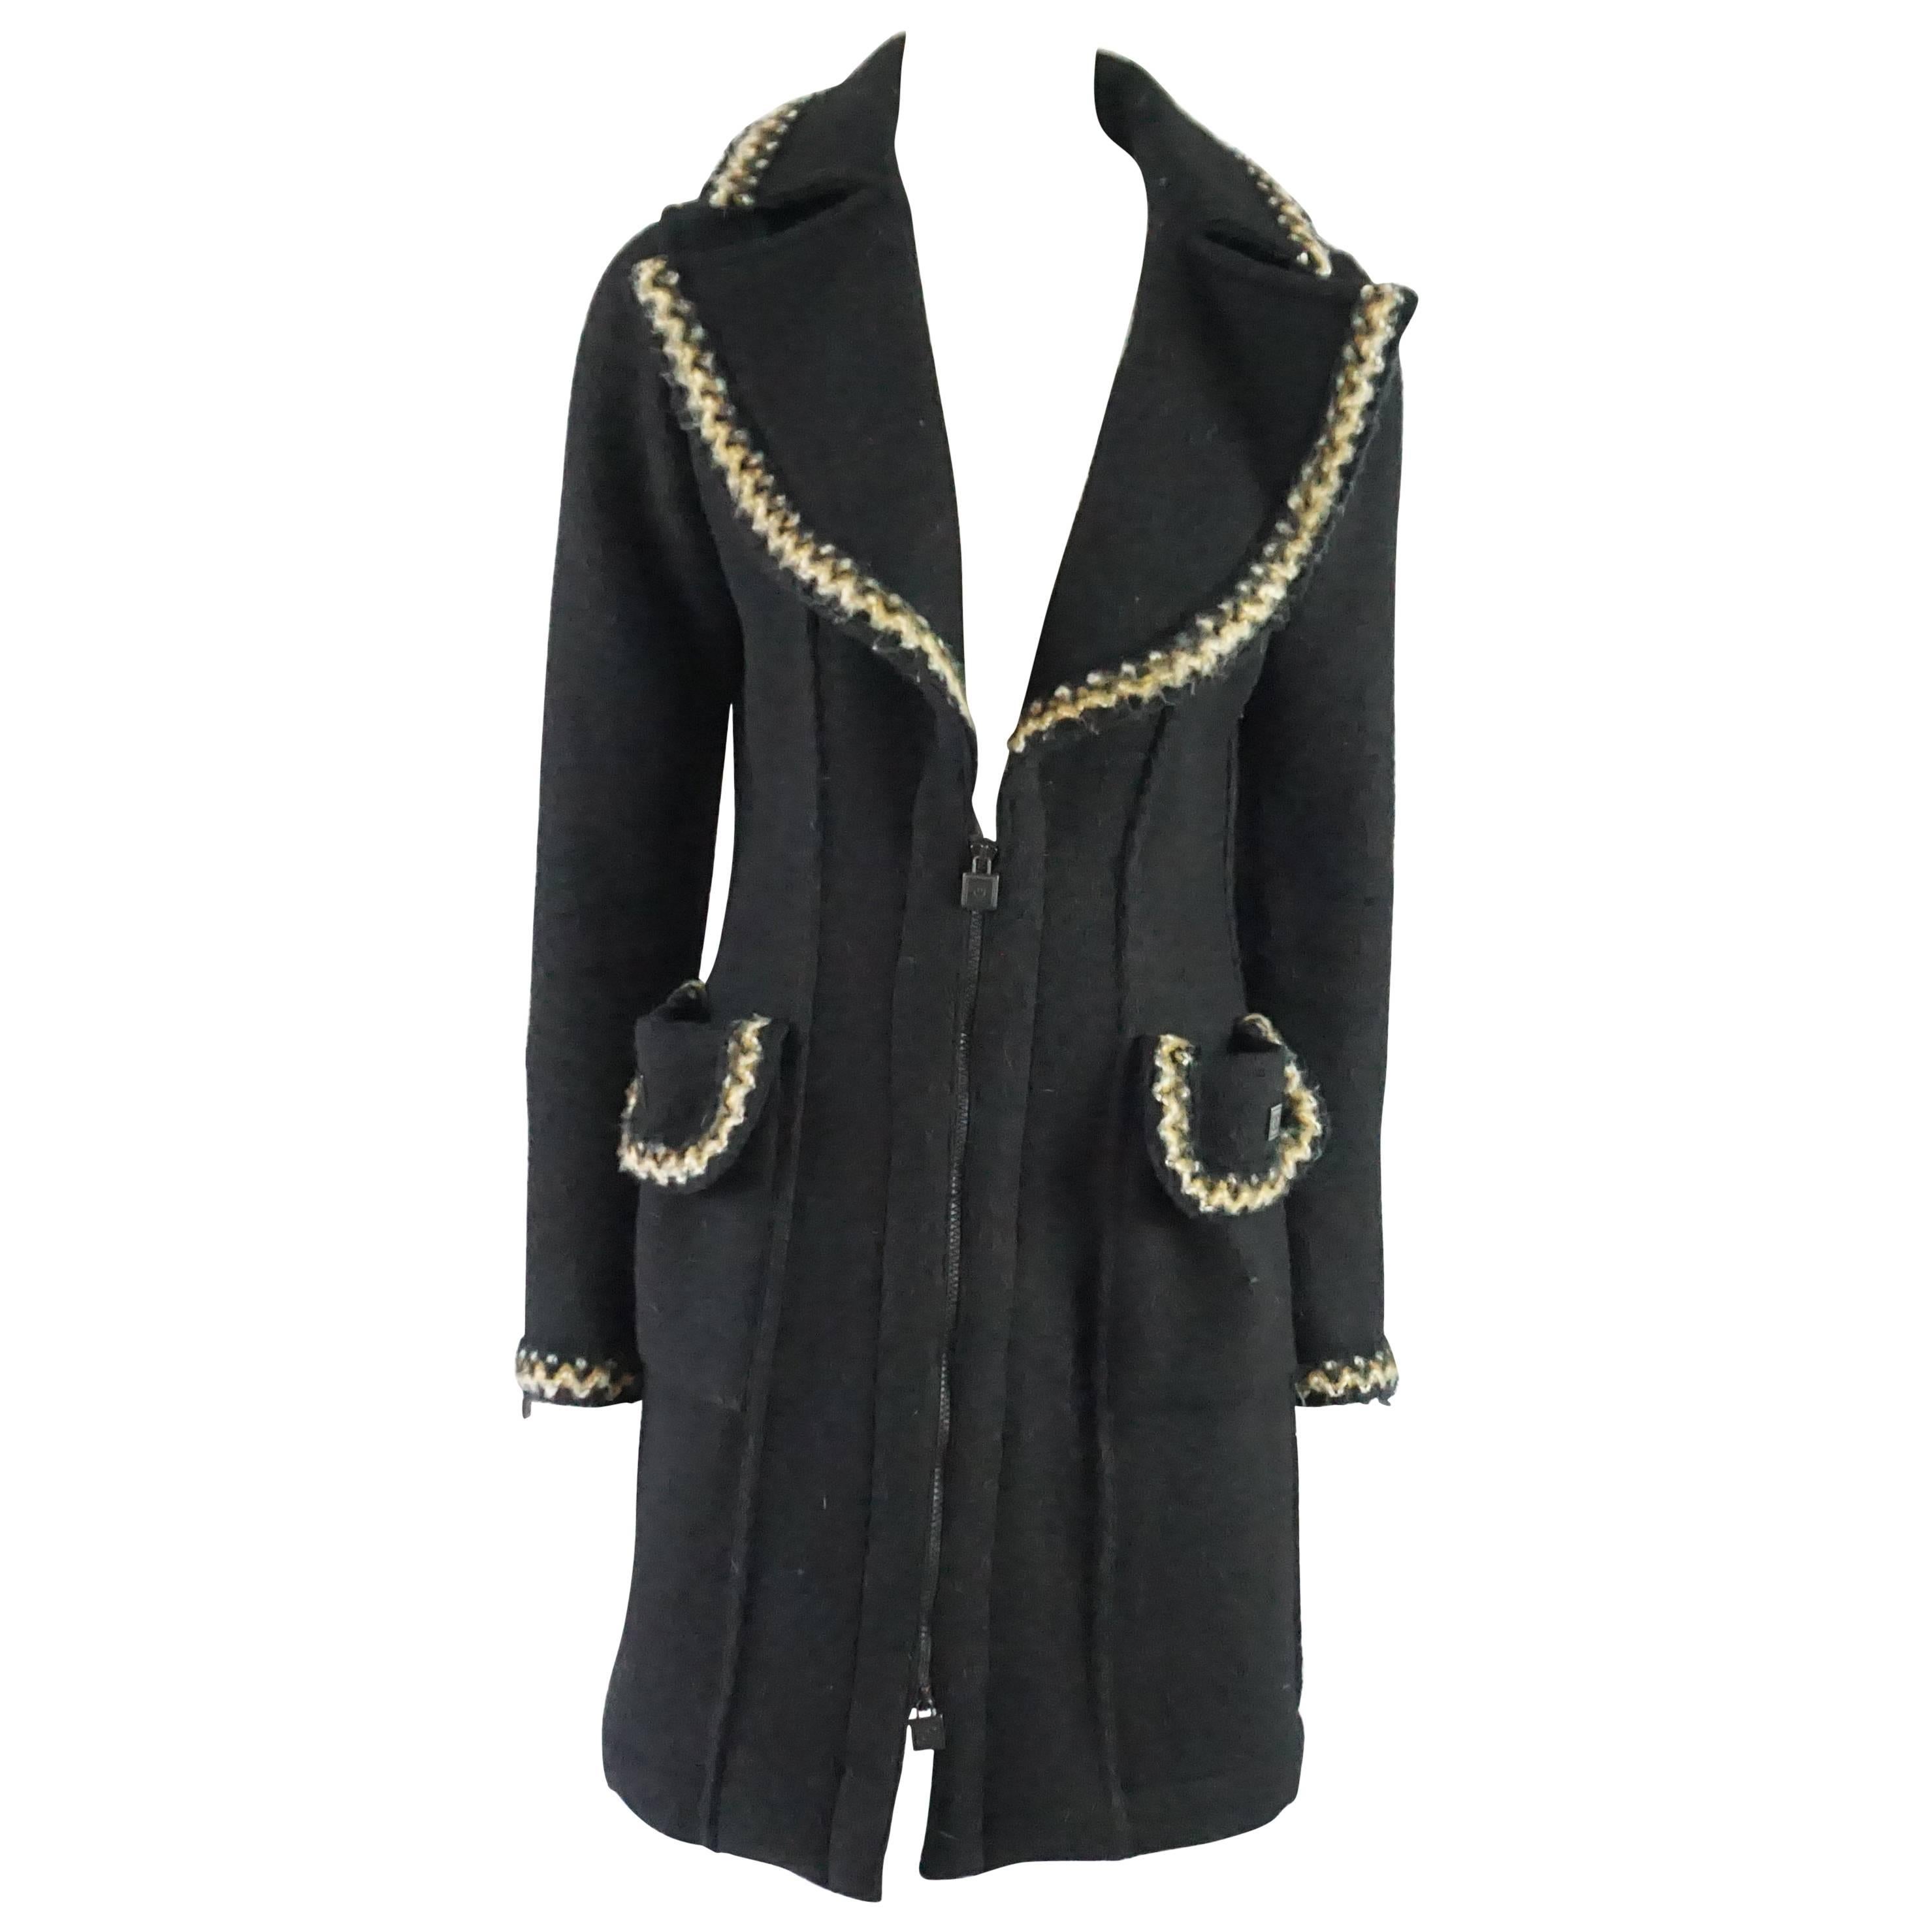 Chanel Black Wool Blend 3/4 Coat with Beige Trim - 36 